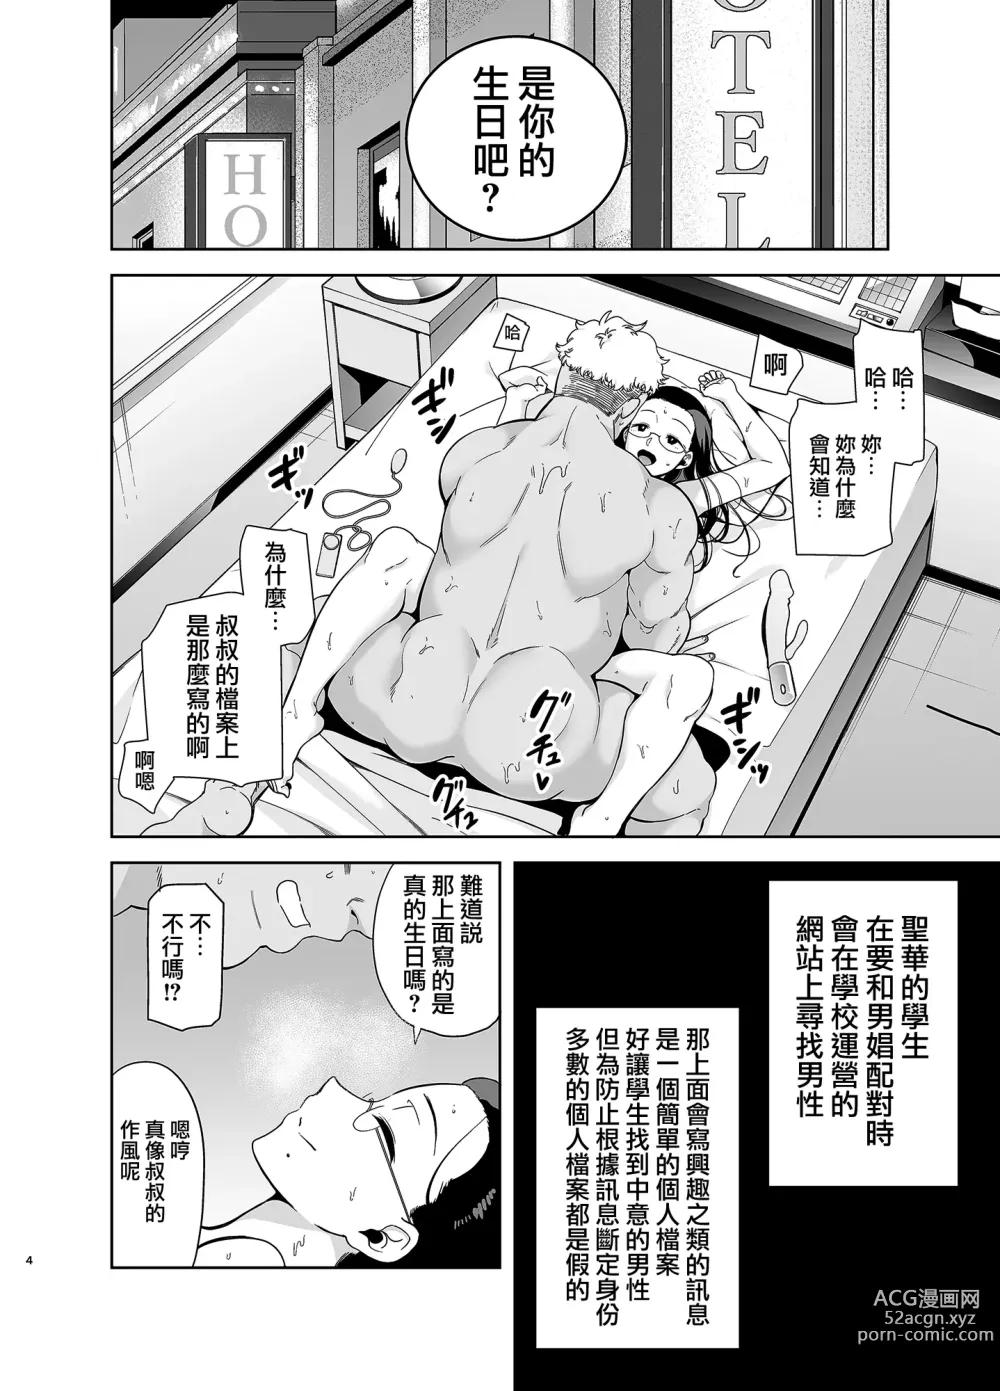 Page 3 of manga 聖華女学院高等部公認竿おじさん 3